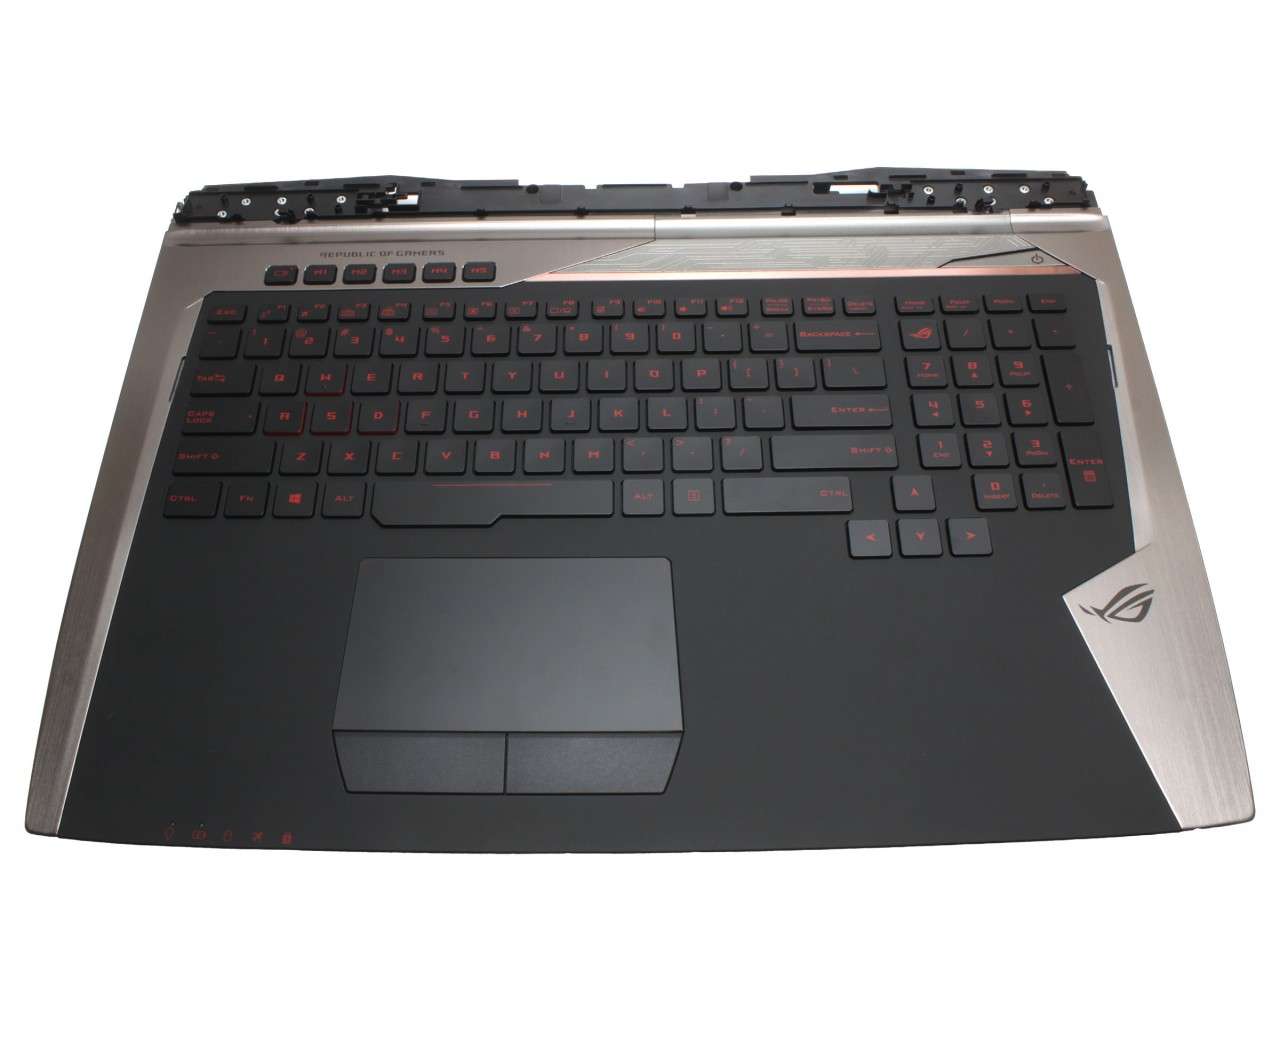 Tastatura Asus G701VIK neagra cu Palmrest si TouchPad negru iluminata backlit